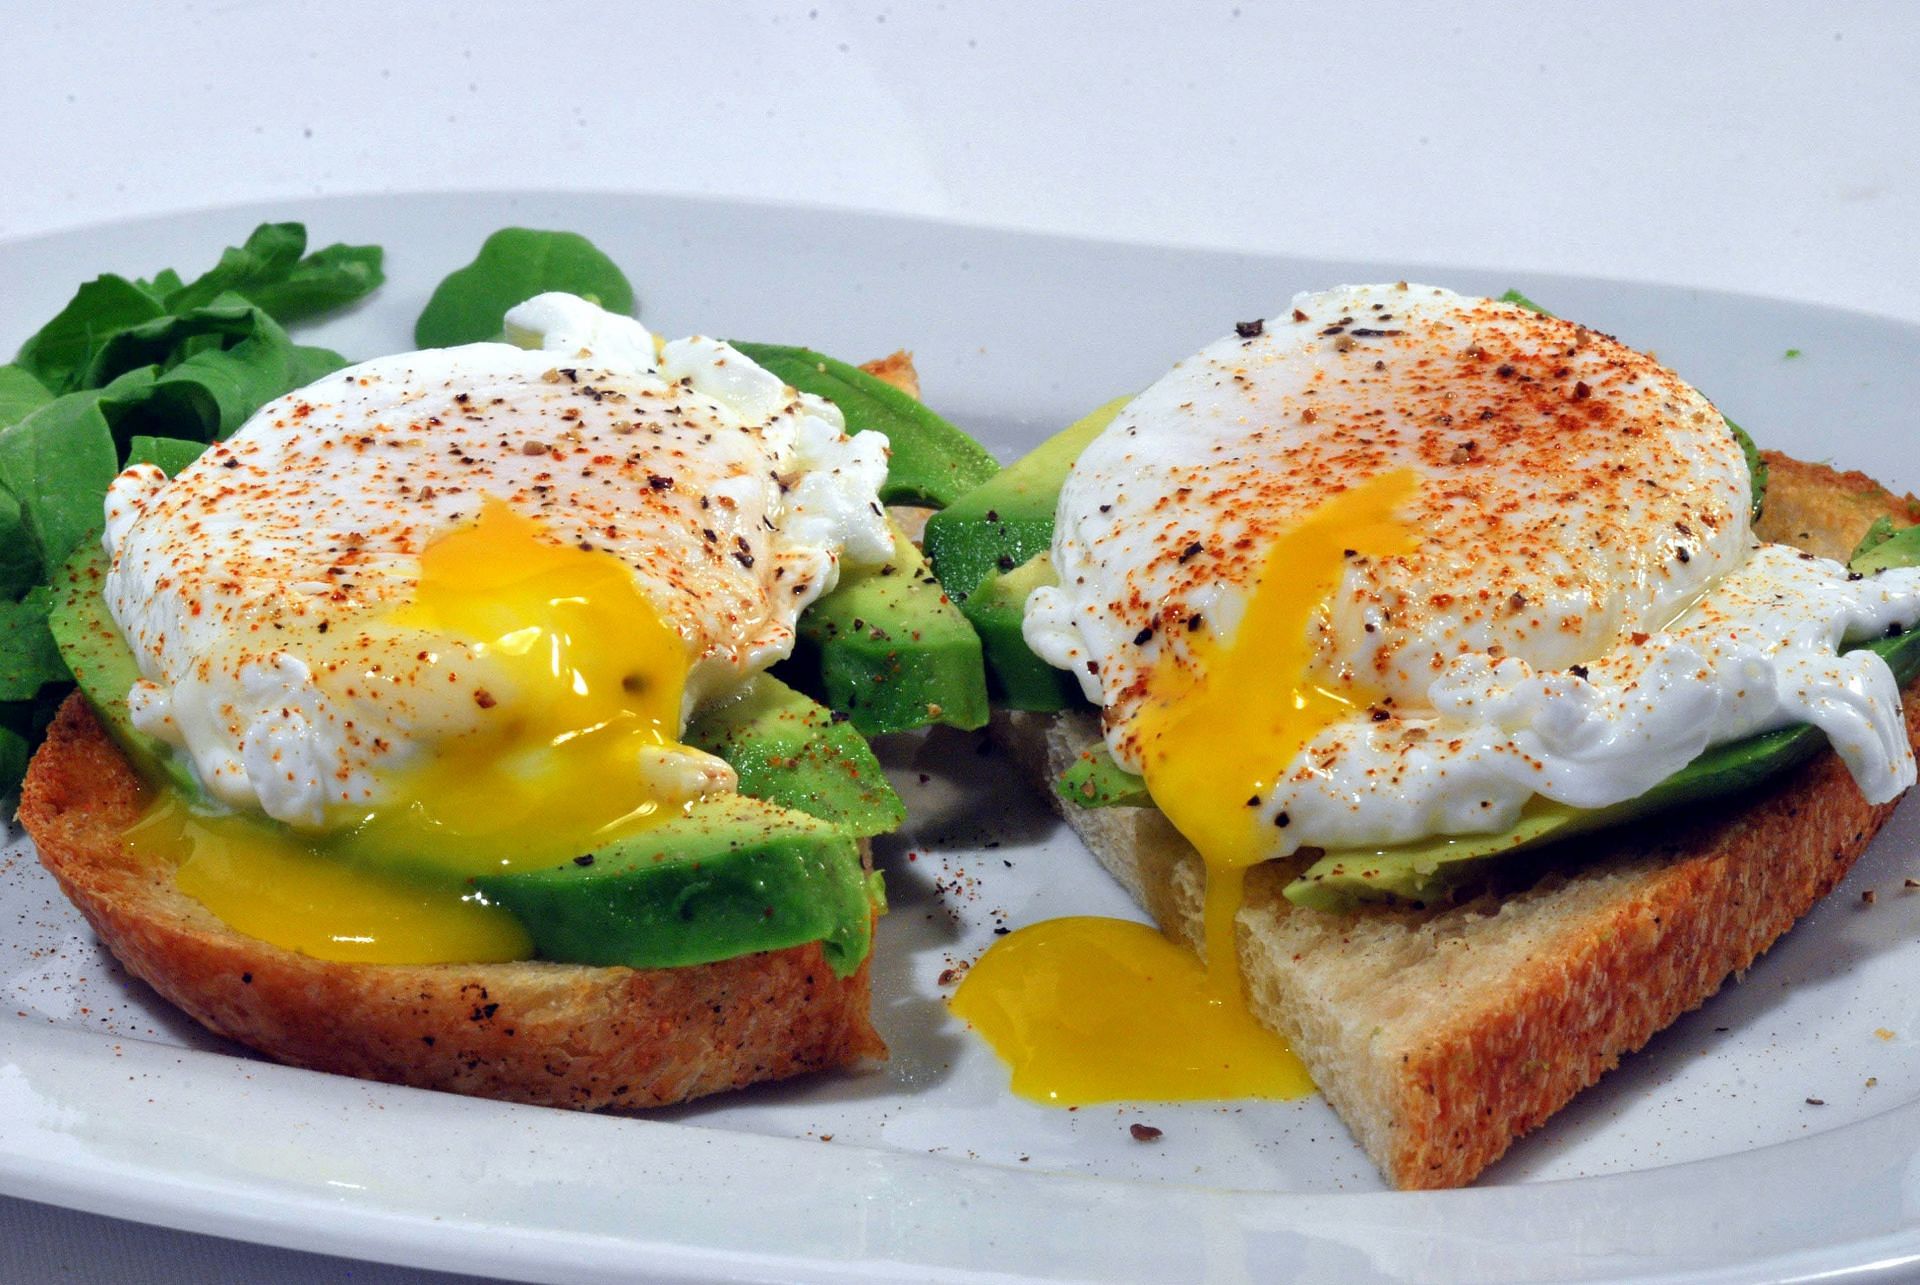 avocados and eggs for breakfast. (Image via Unsplash / David B Townsend)